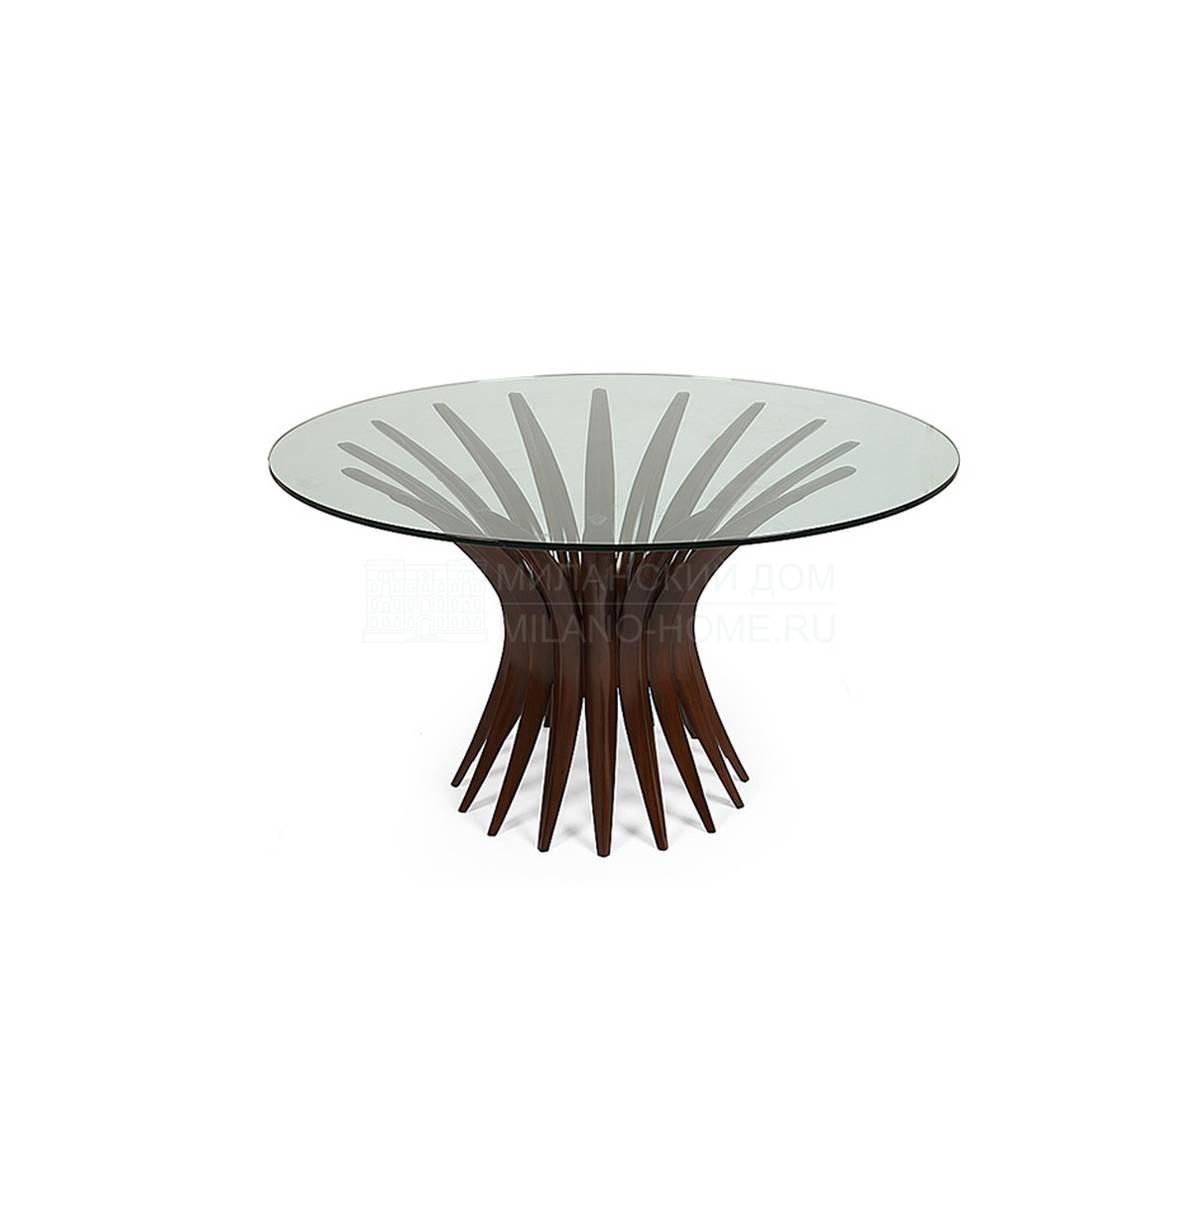 Обеденный стол Niemeyer table из США фабрики CHRISTOPHER GUY